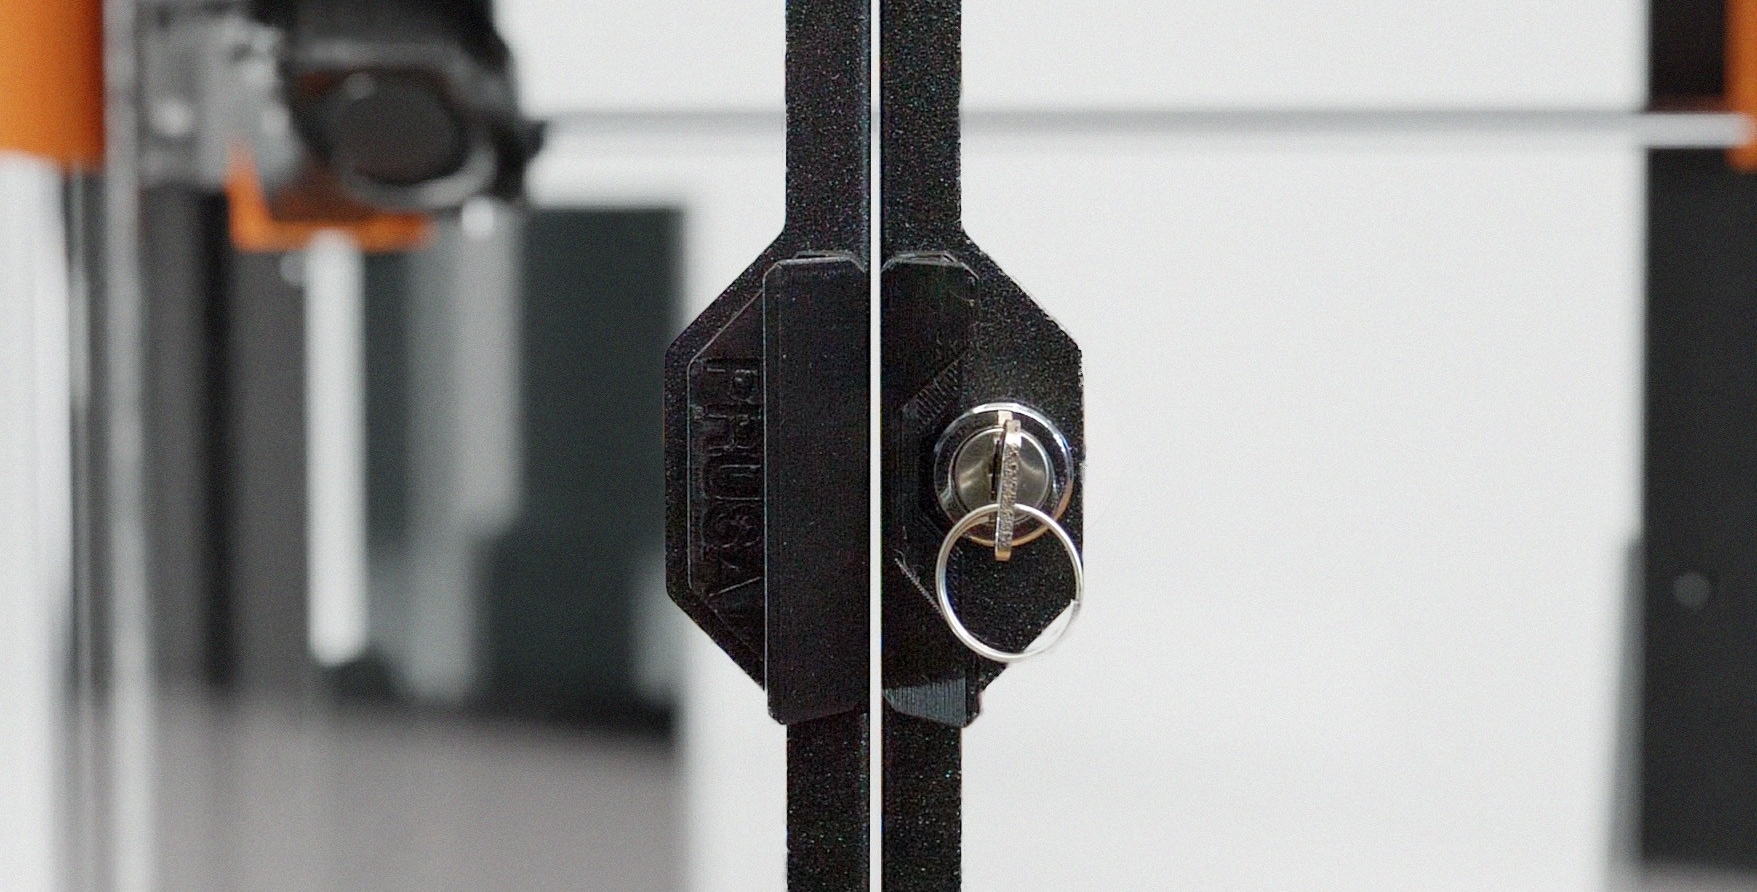 closeup of enclosure lock and key